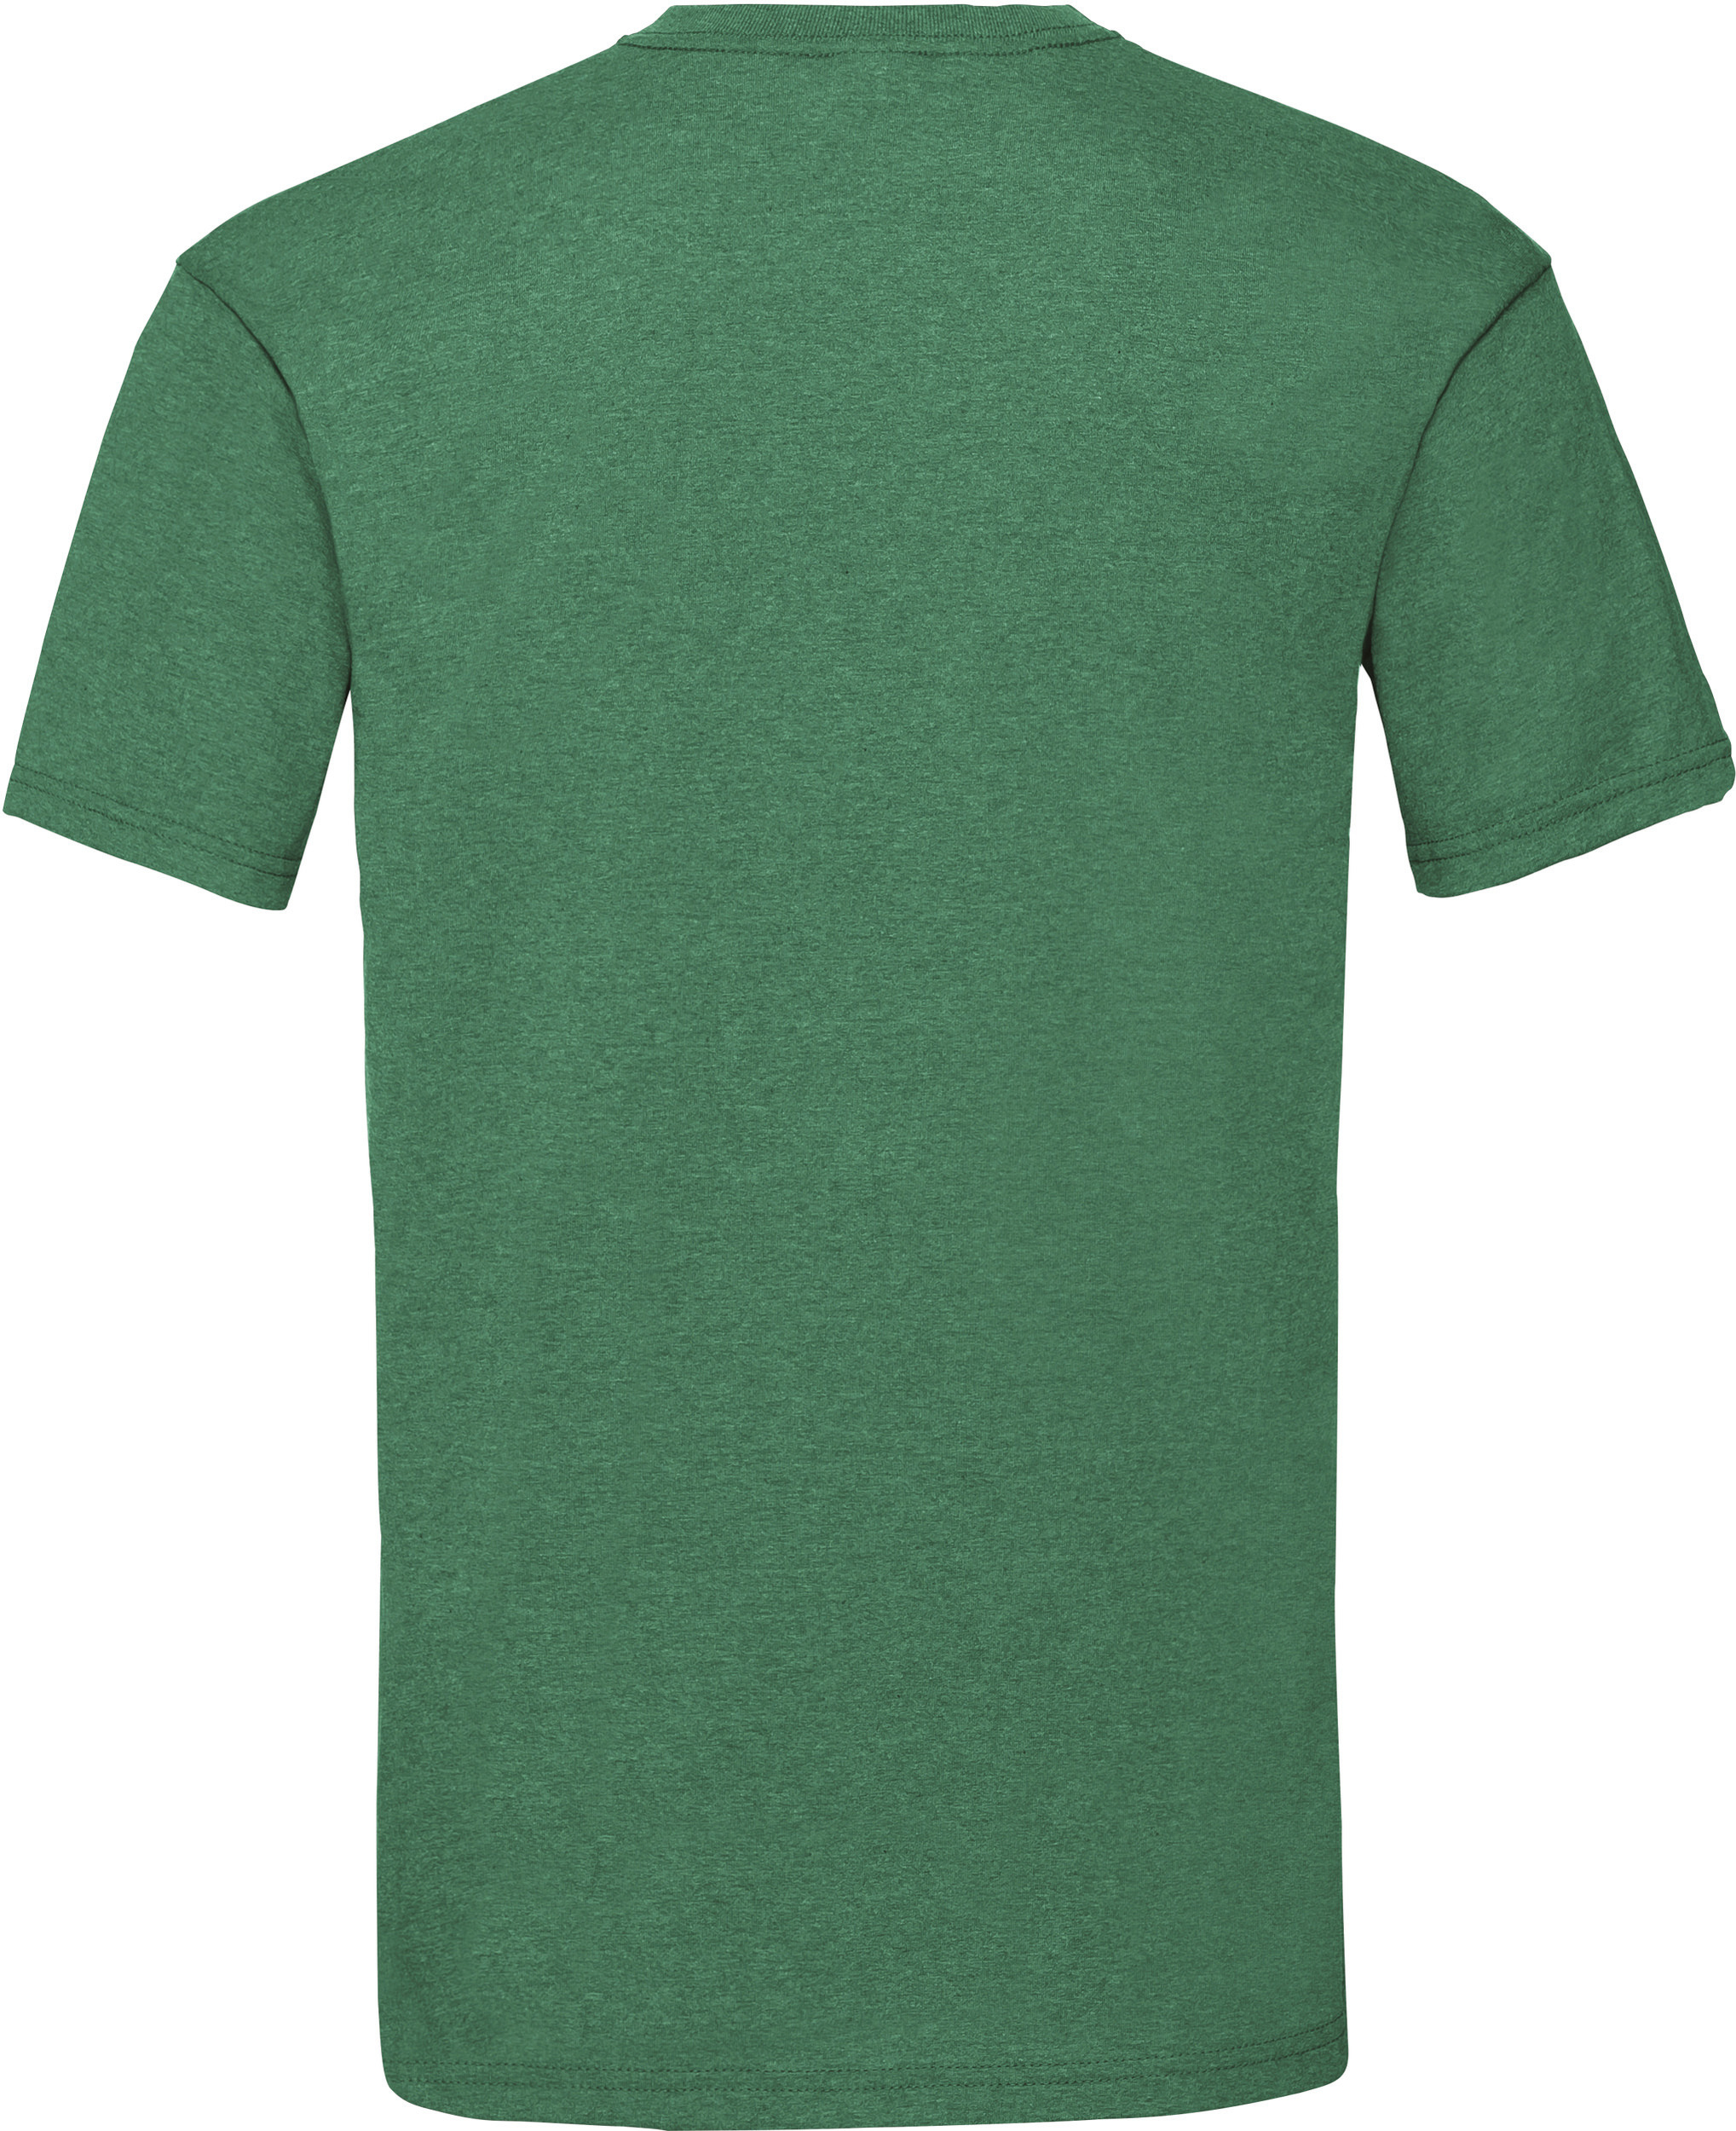 Camiseta valueweight para hombre (61-036-0)